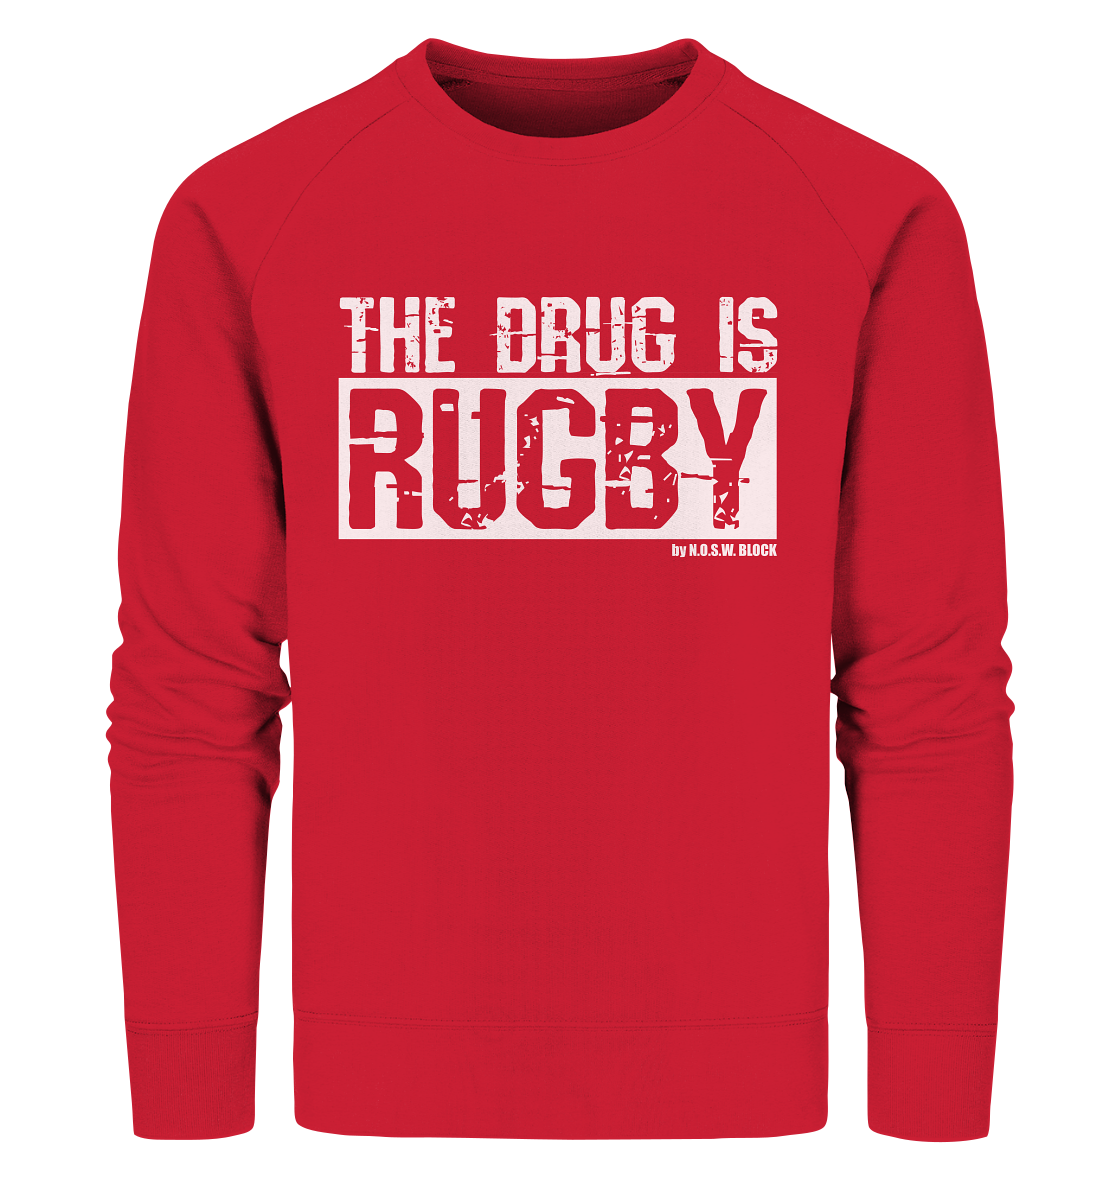 N.O.S.W. BLOCK Fanblock Sweater "THE DRUG IS RUGBY" Männer Organic Sweatshirt rot